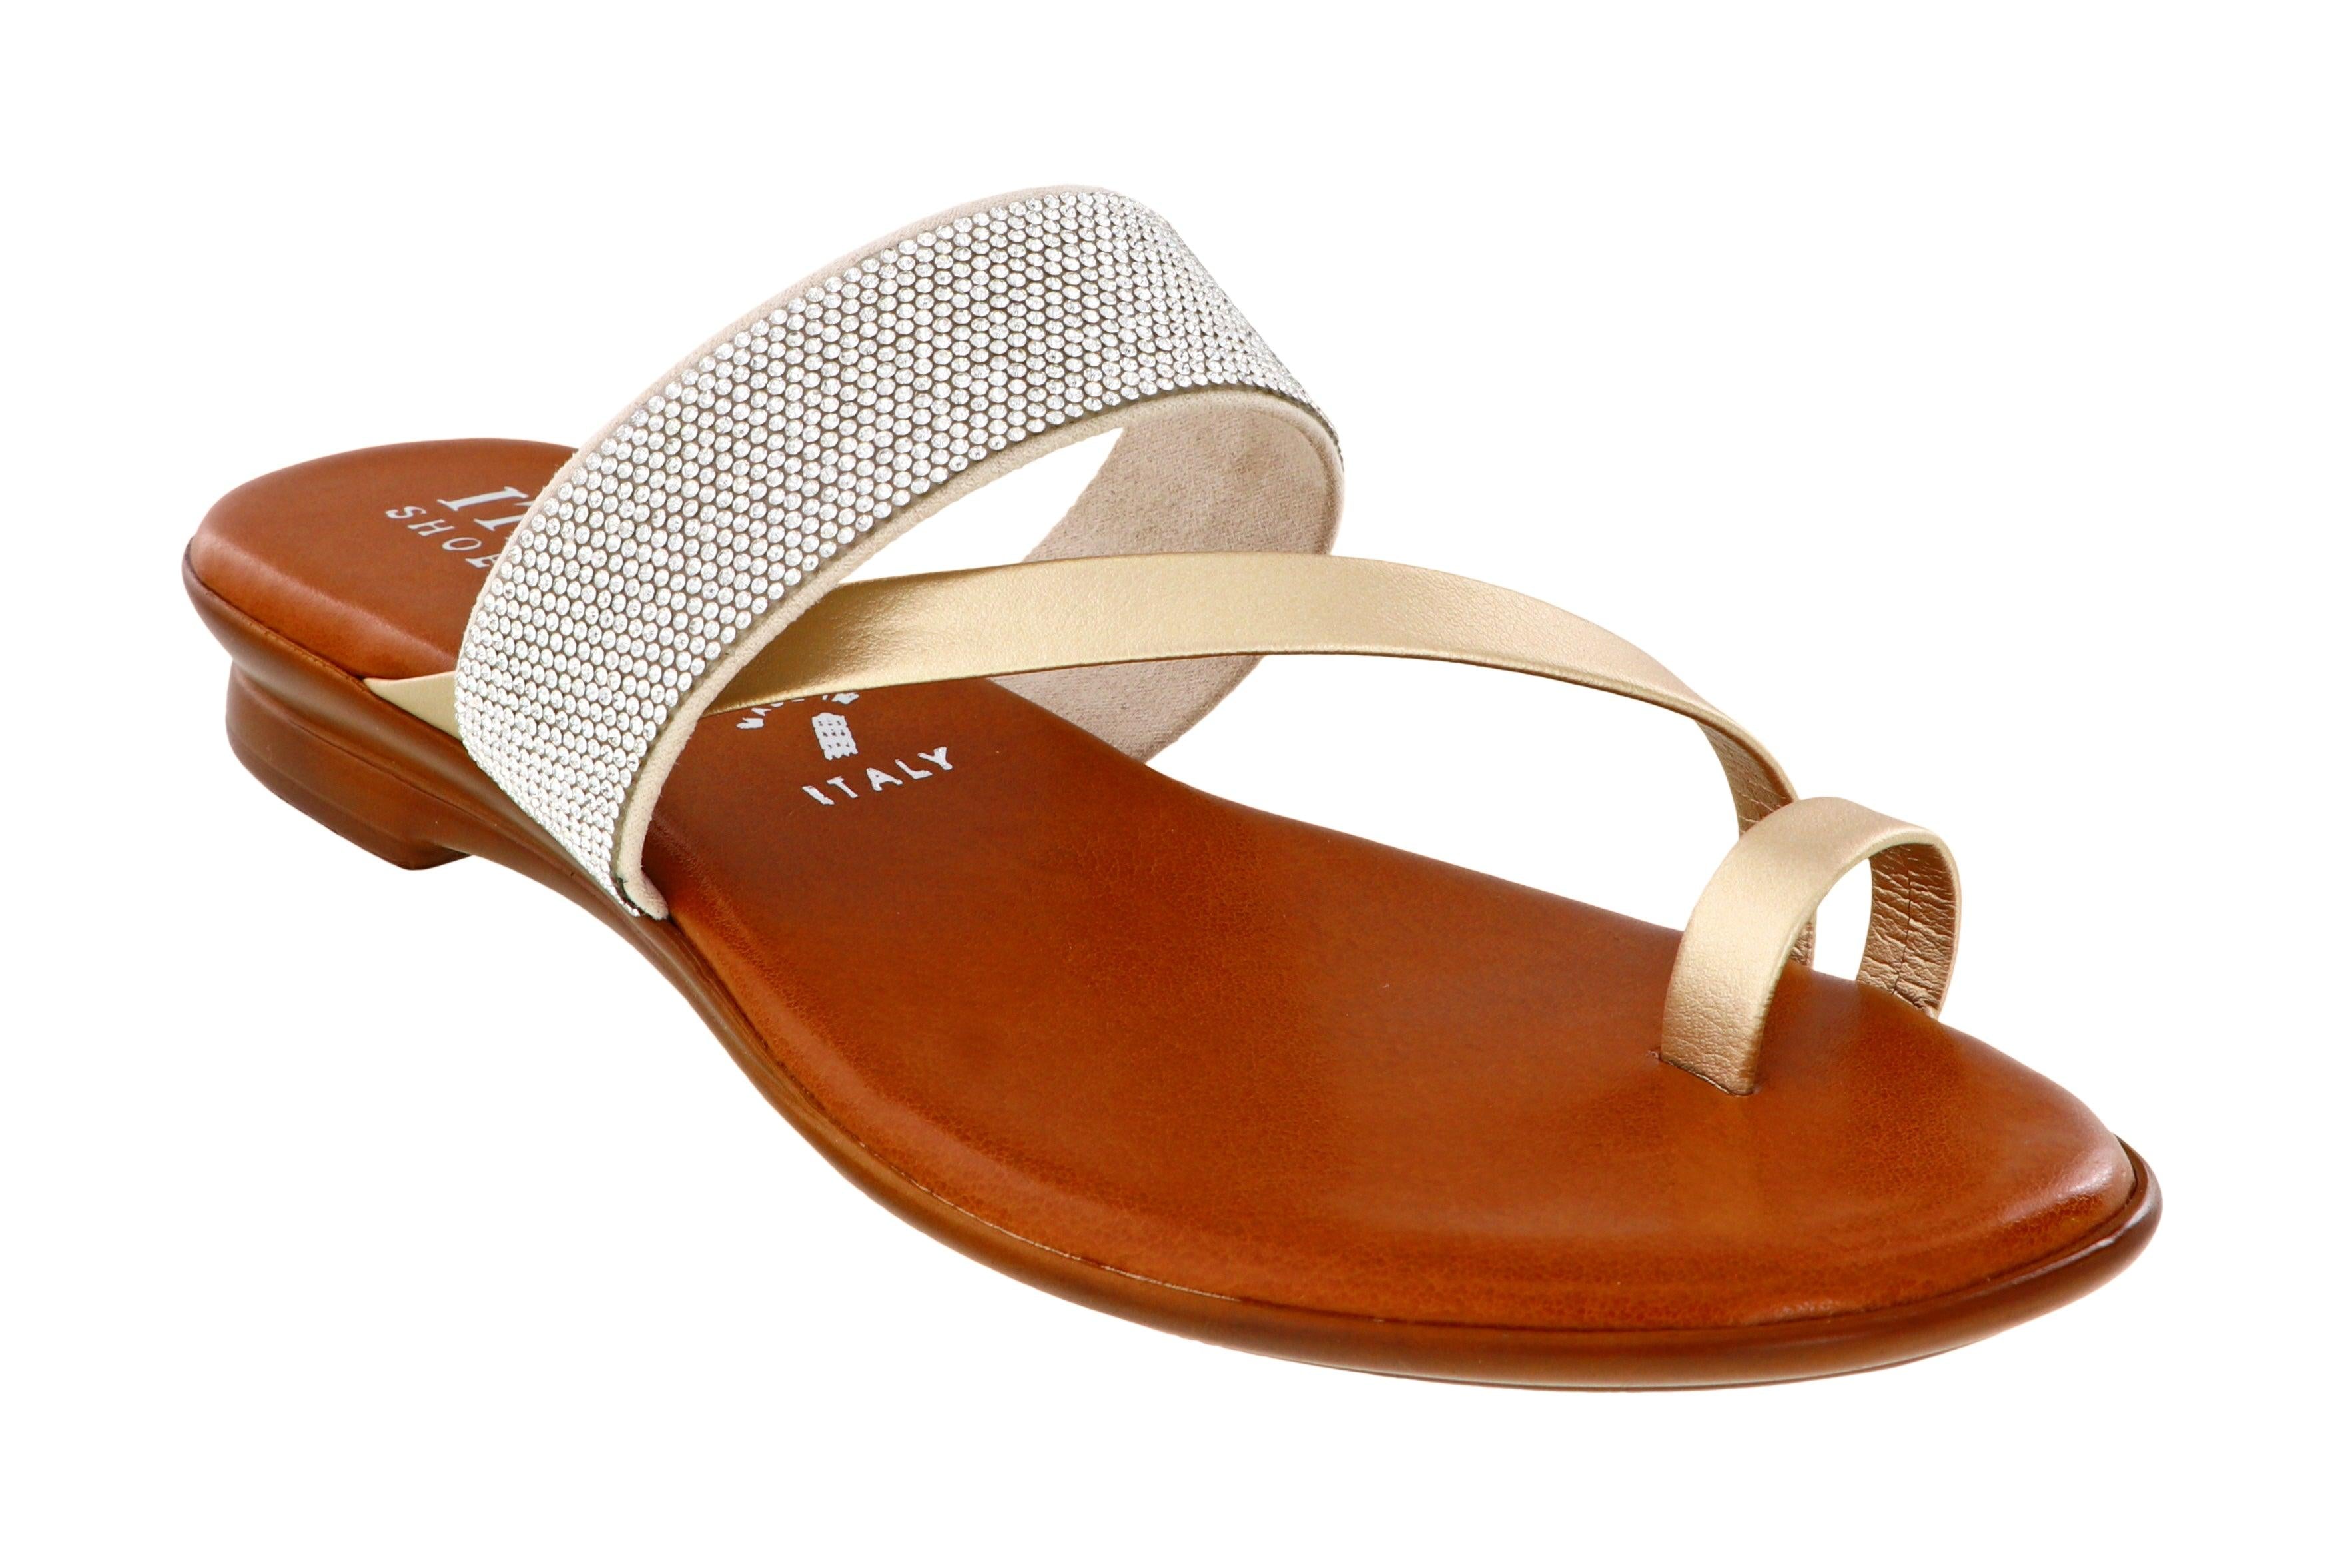 Italian Flat Sandals | Women's Flat Sandals & Flip Flops Made in Italy ...